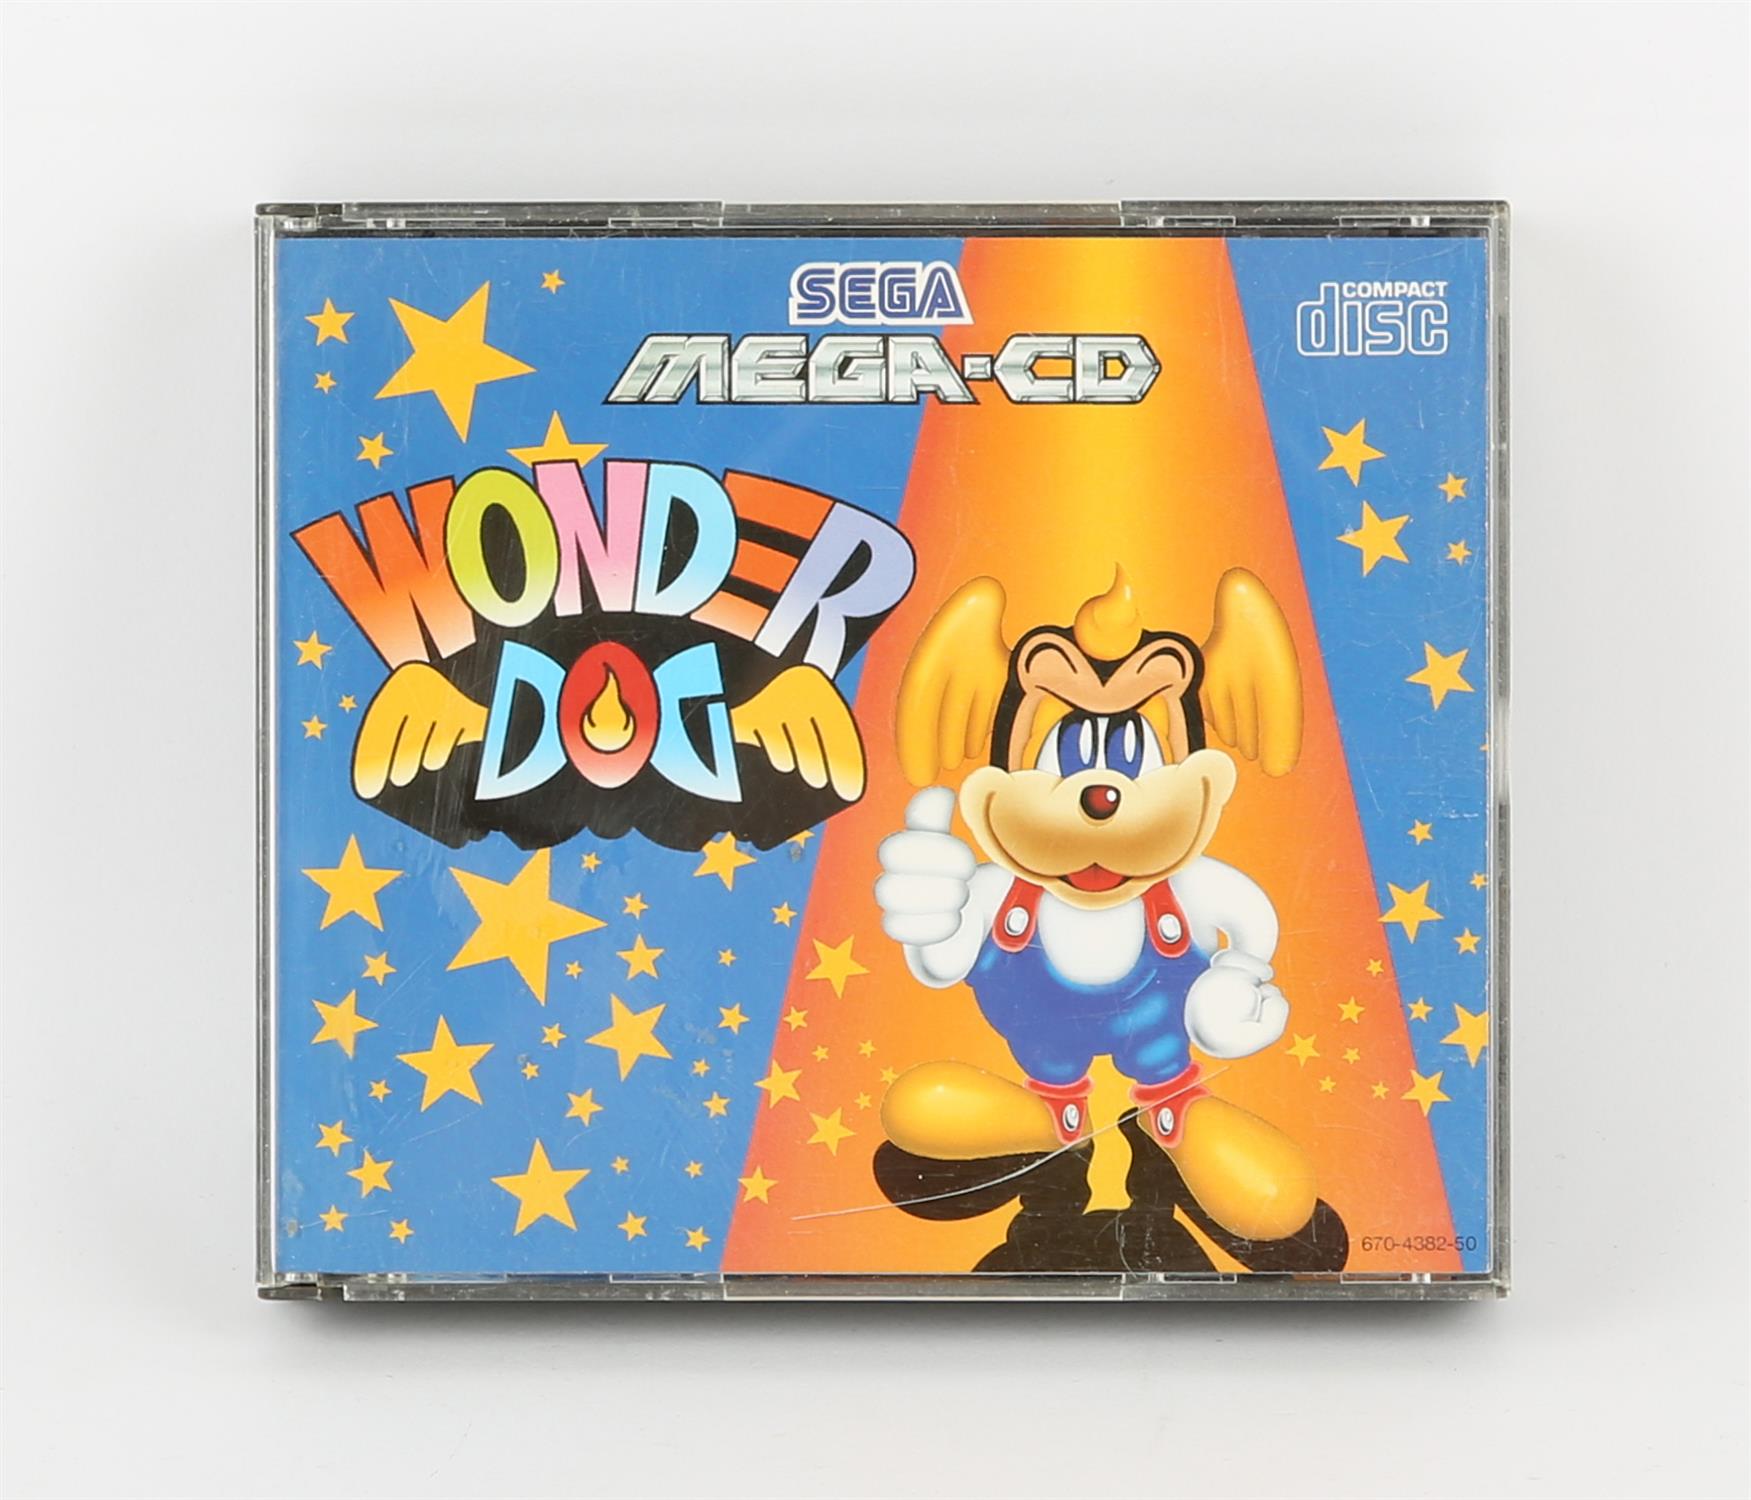 Sega Mega-CD Wonder Dog boxed game (with Battlecorps Demo disc) (PAL) Game is complete,